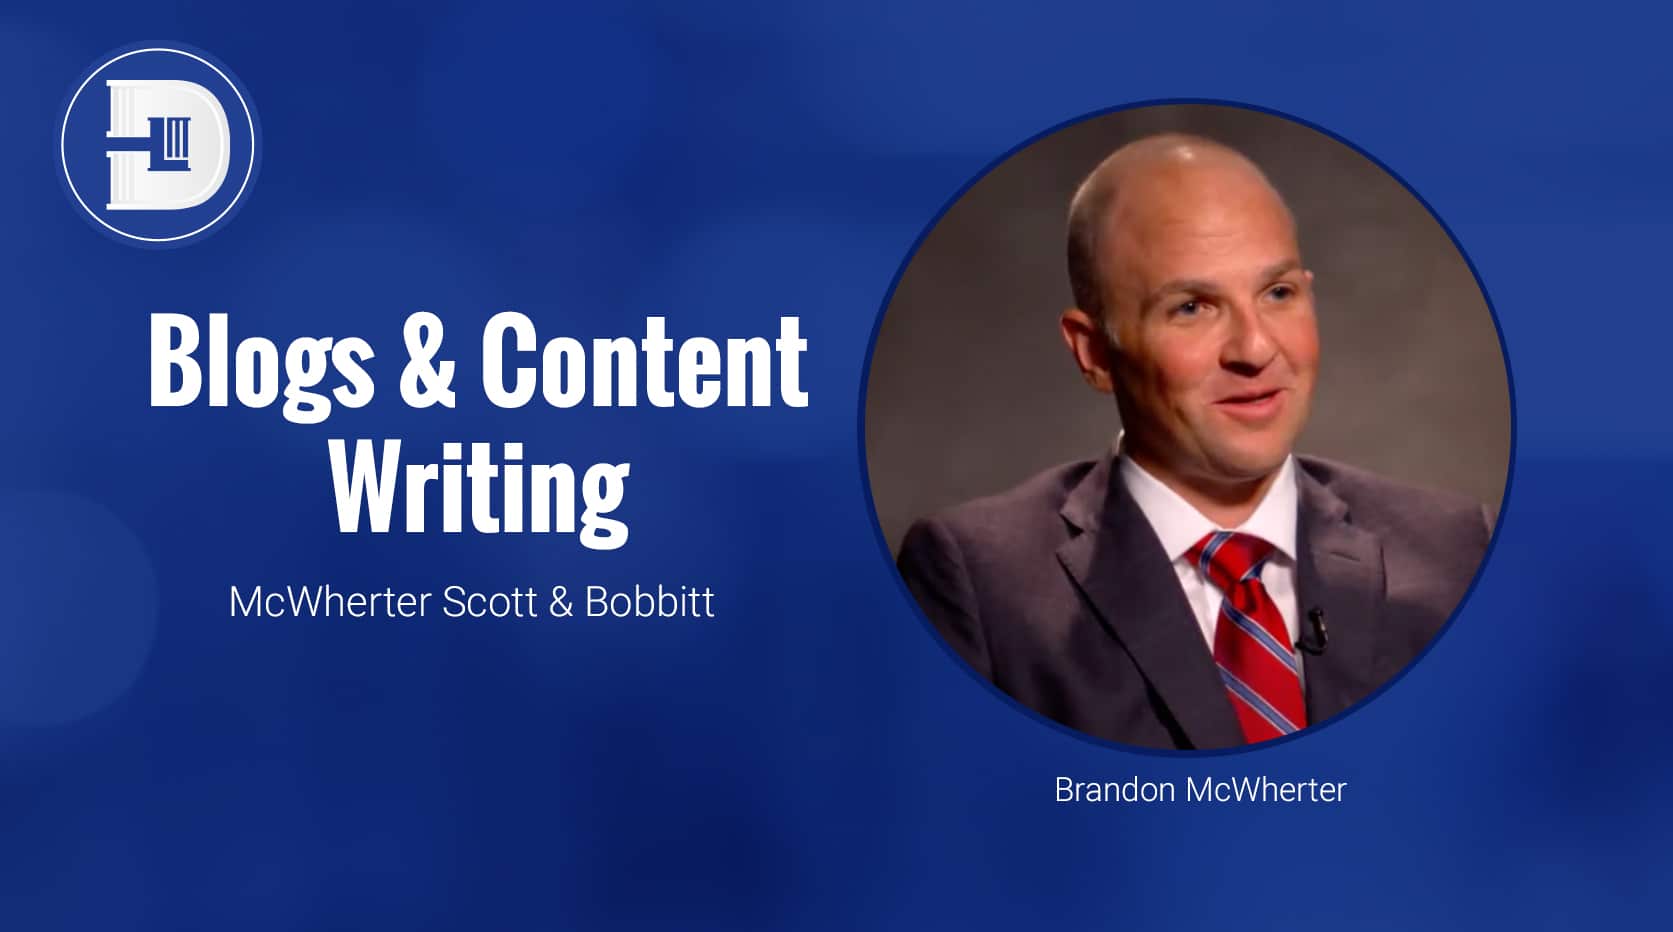 Blogs & Content Writing - Brandon McWherter